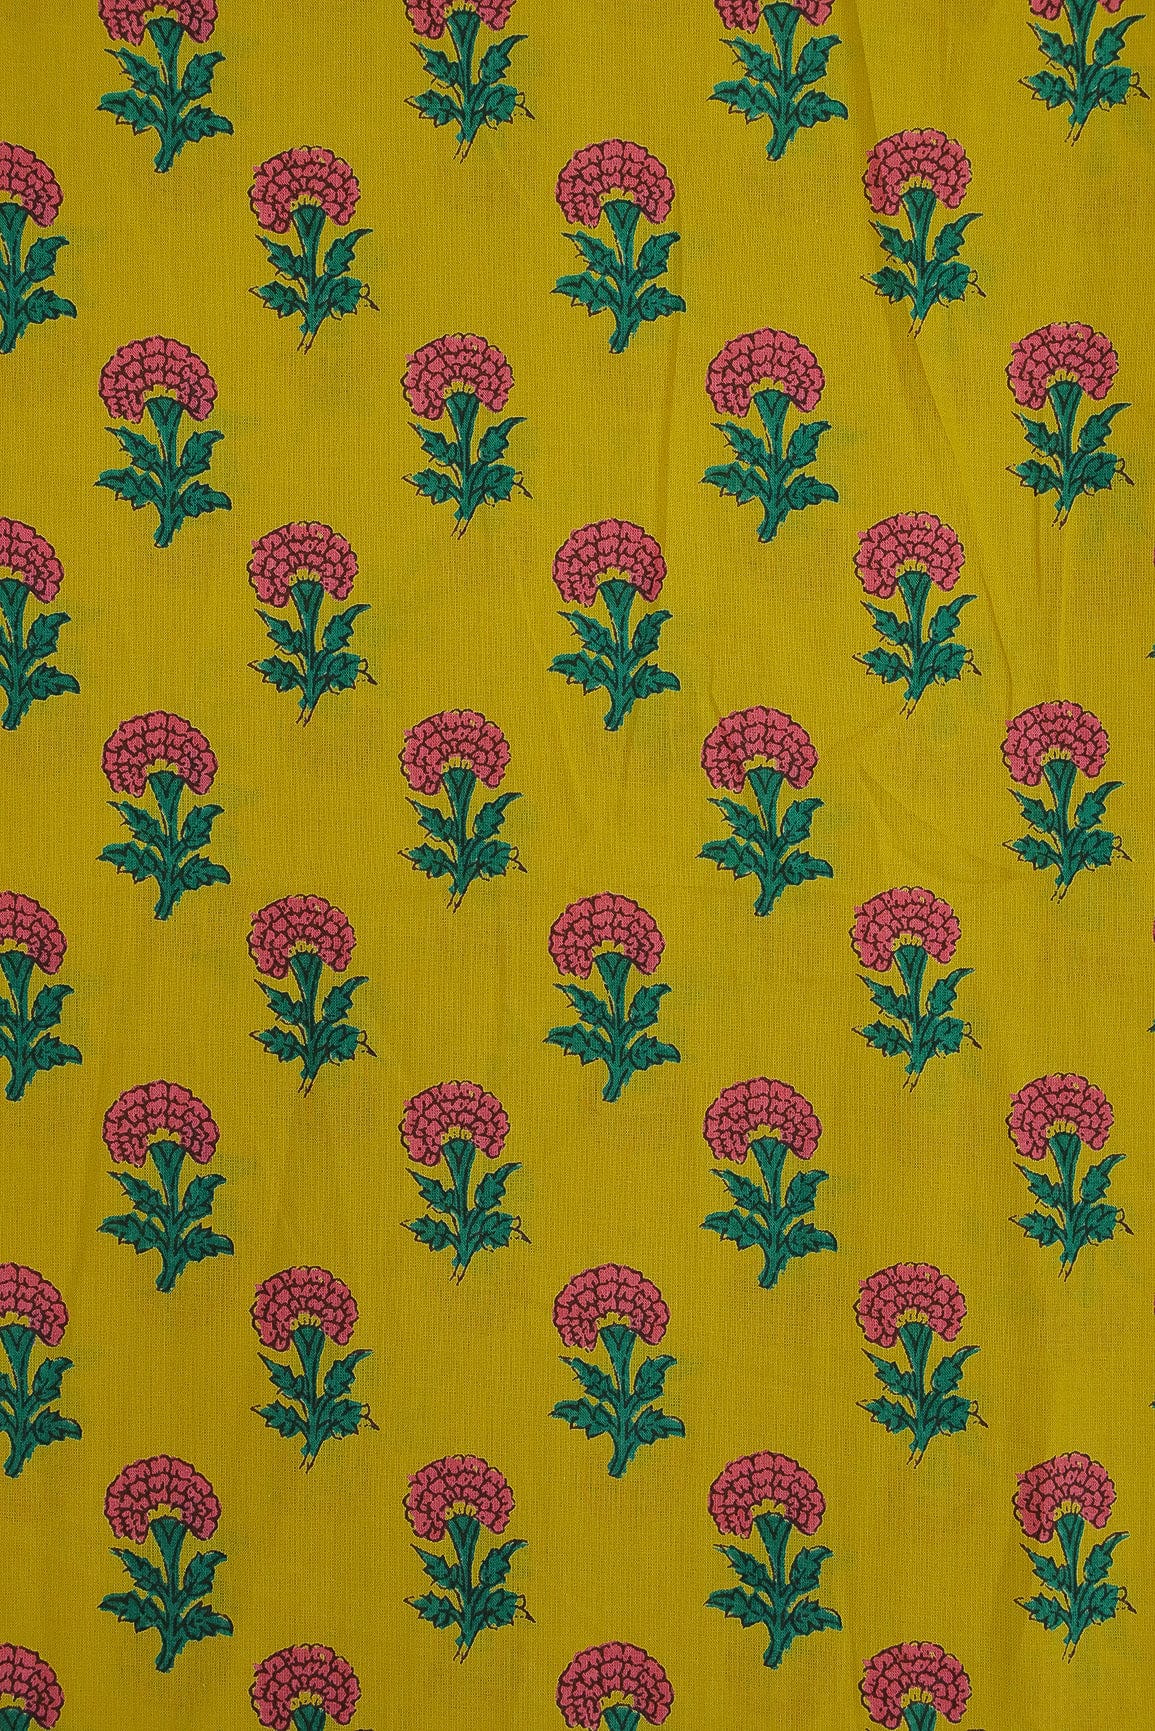 doeraa Prints Elegant Floral Motif Screen Print On organic Yellow Cotton Fabric